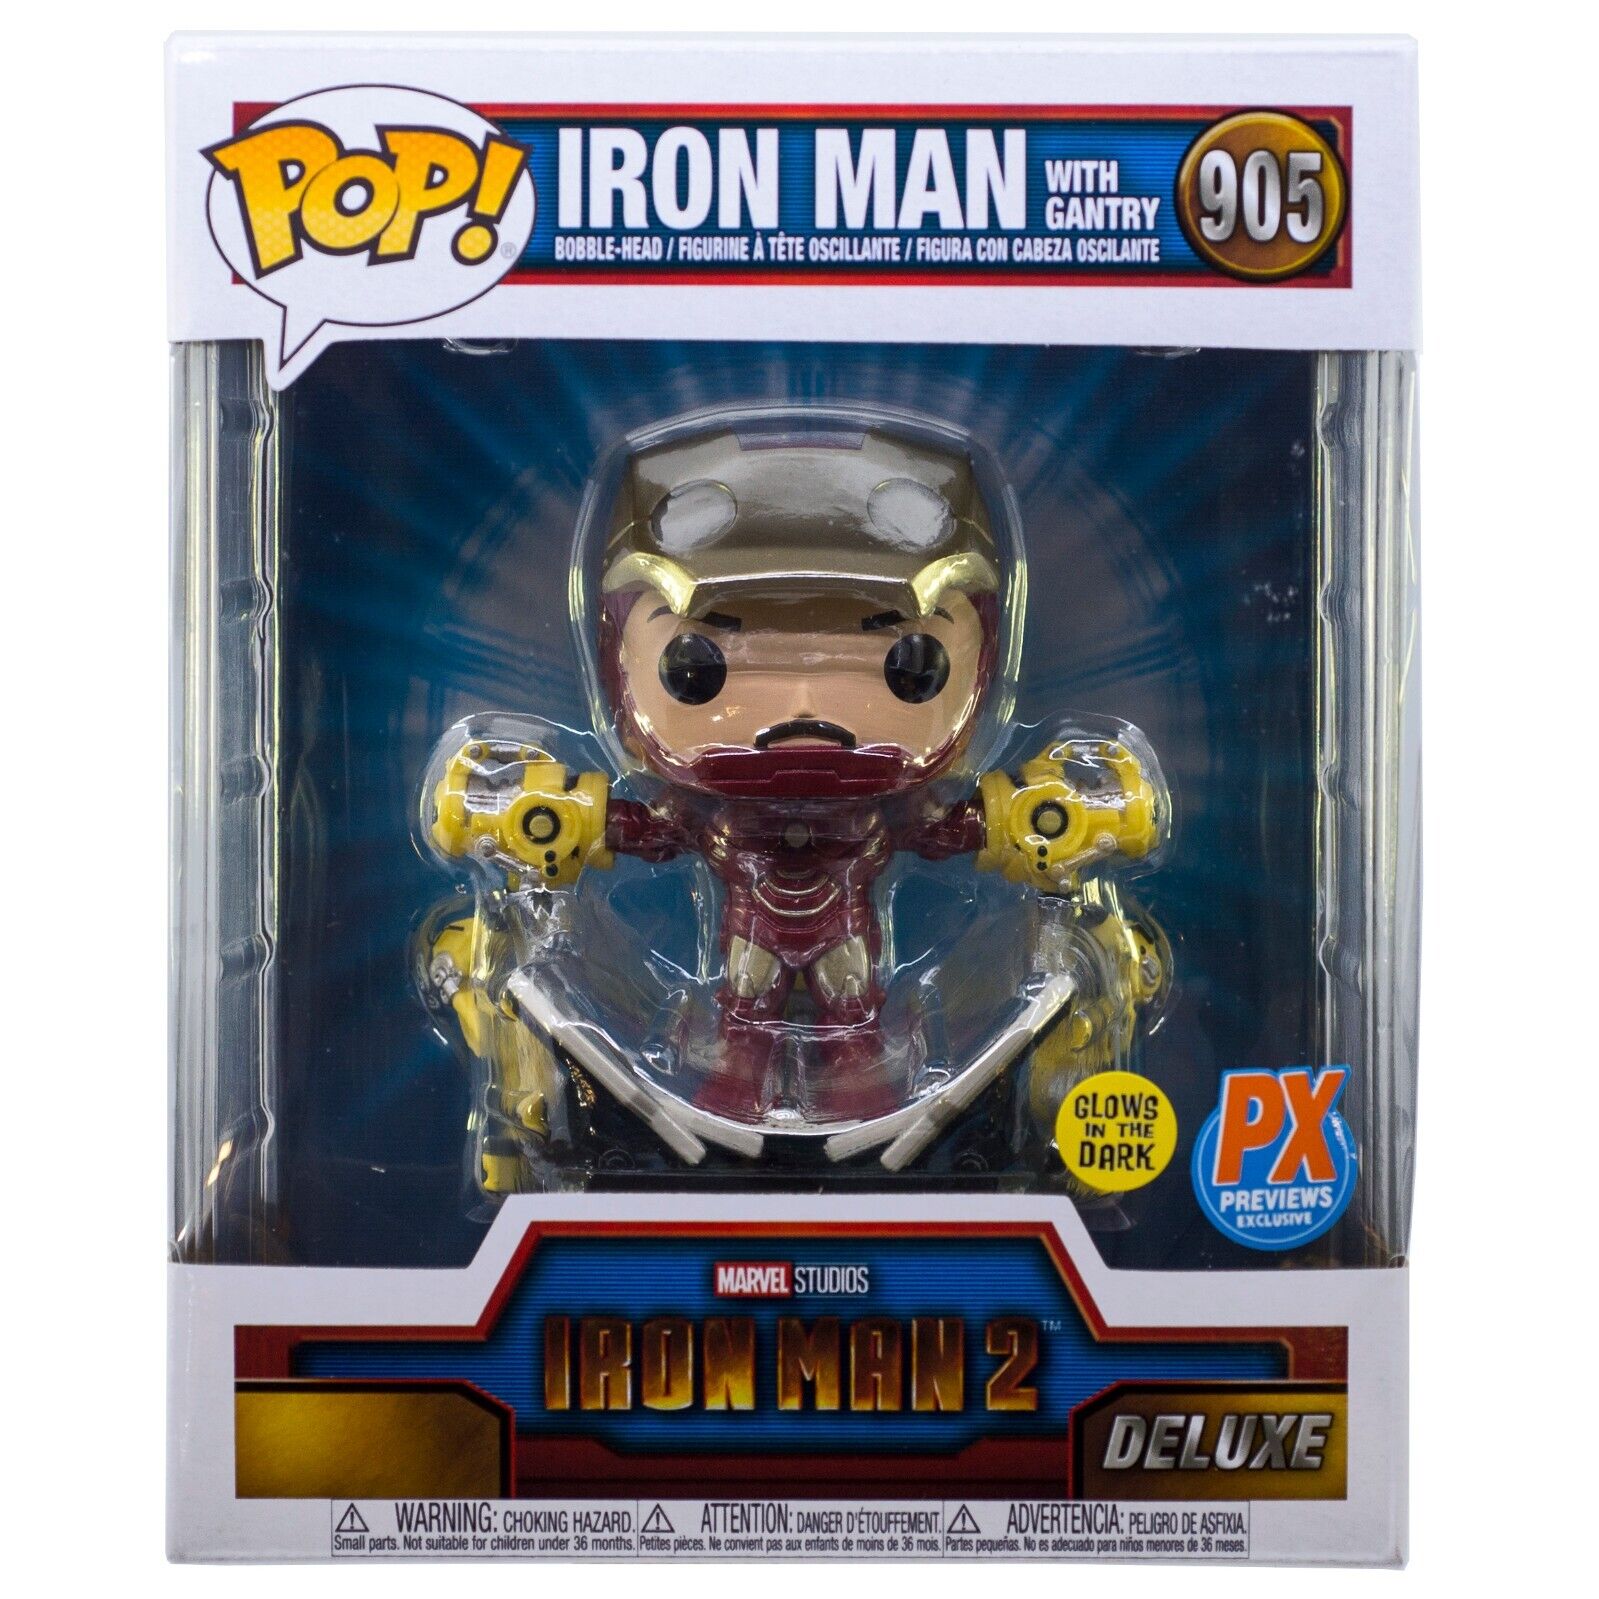 Funko Iron Man With Gantry Glows in the Dark PX Previews Exclusive 905 (Marvel Iron Man 2)